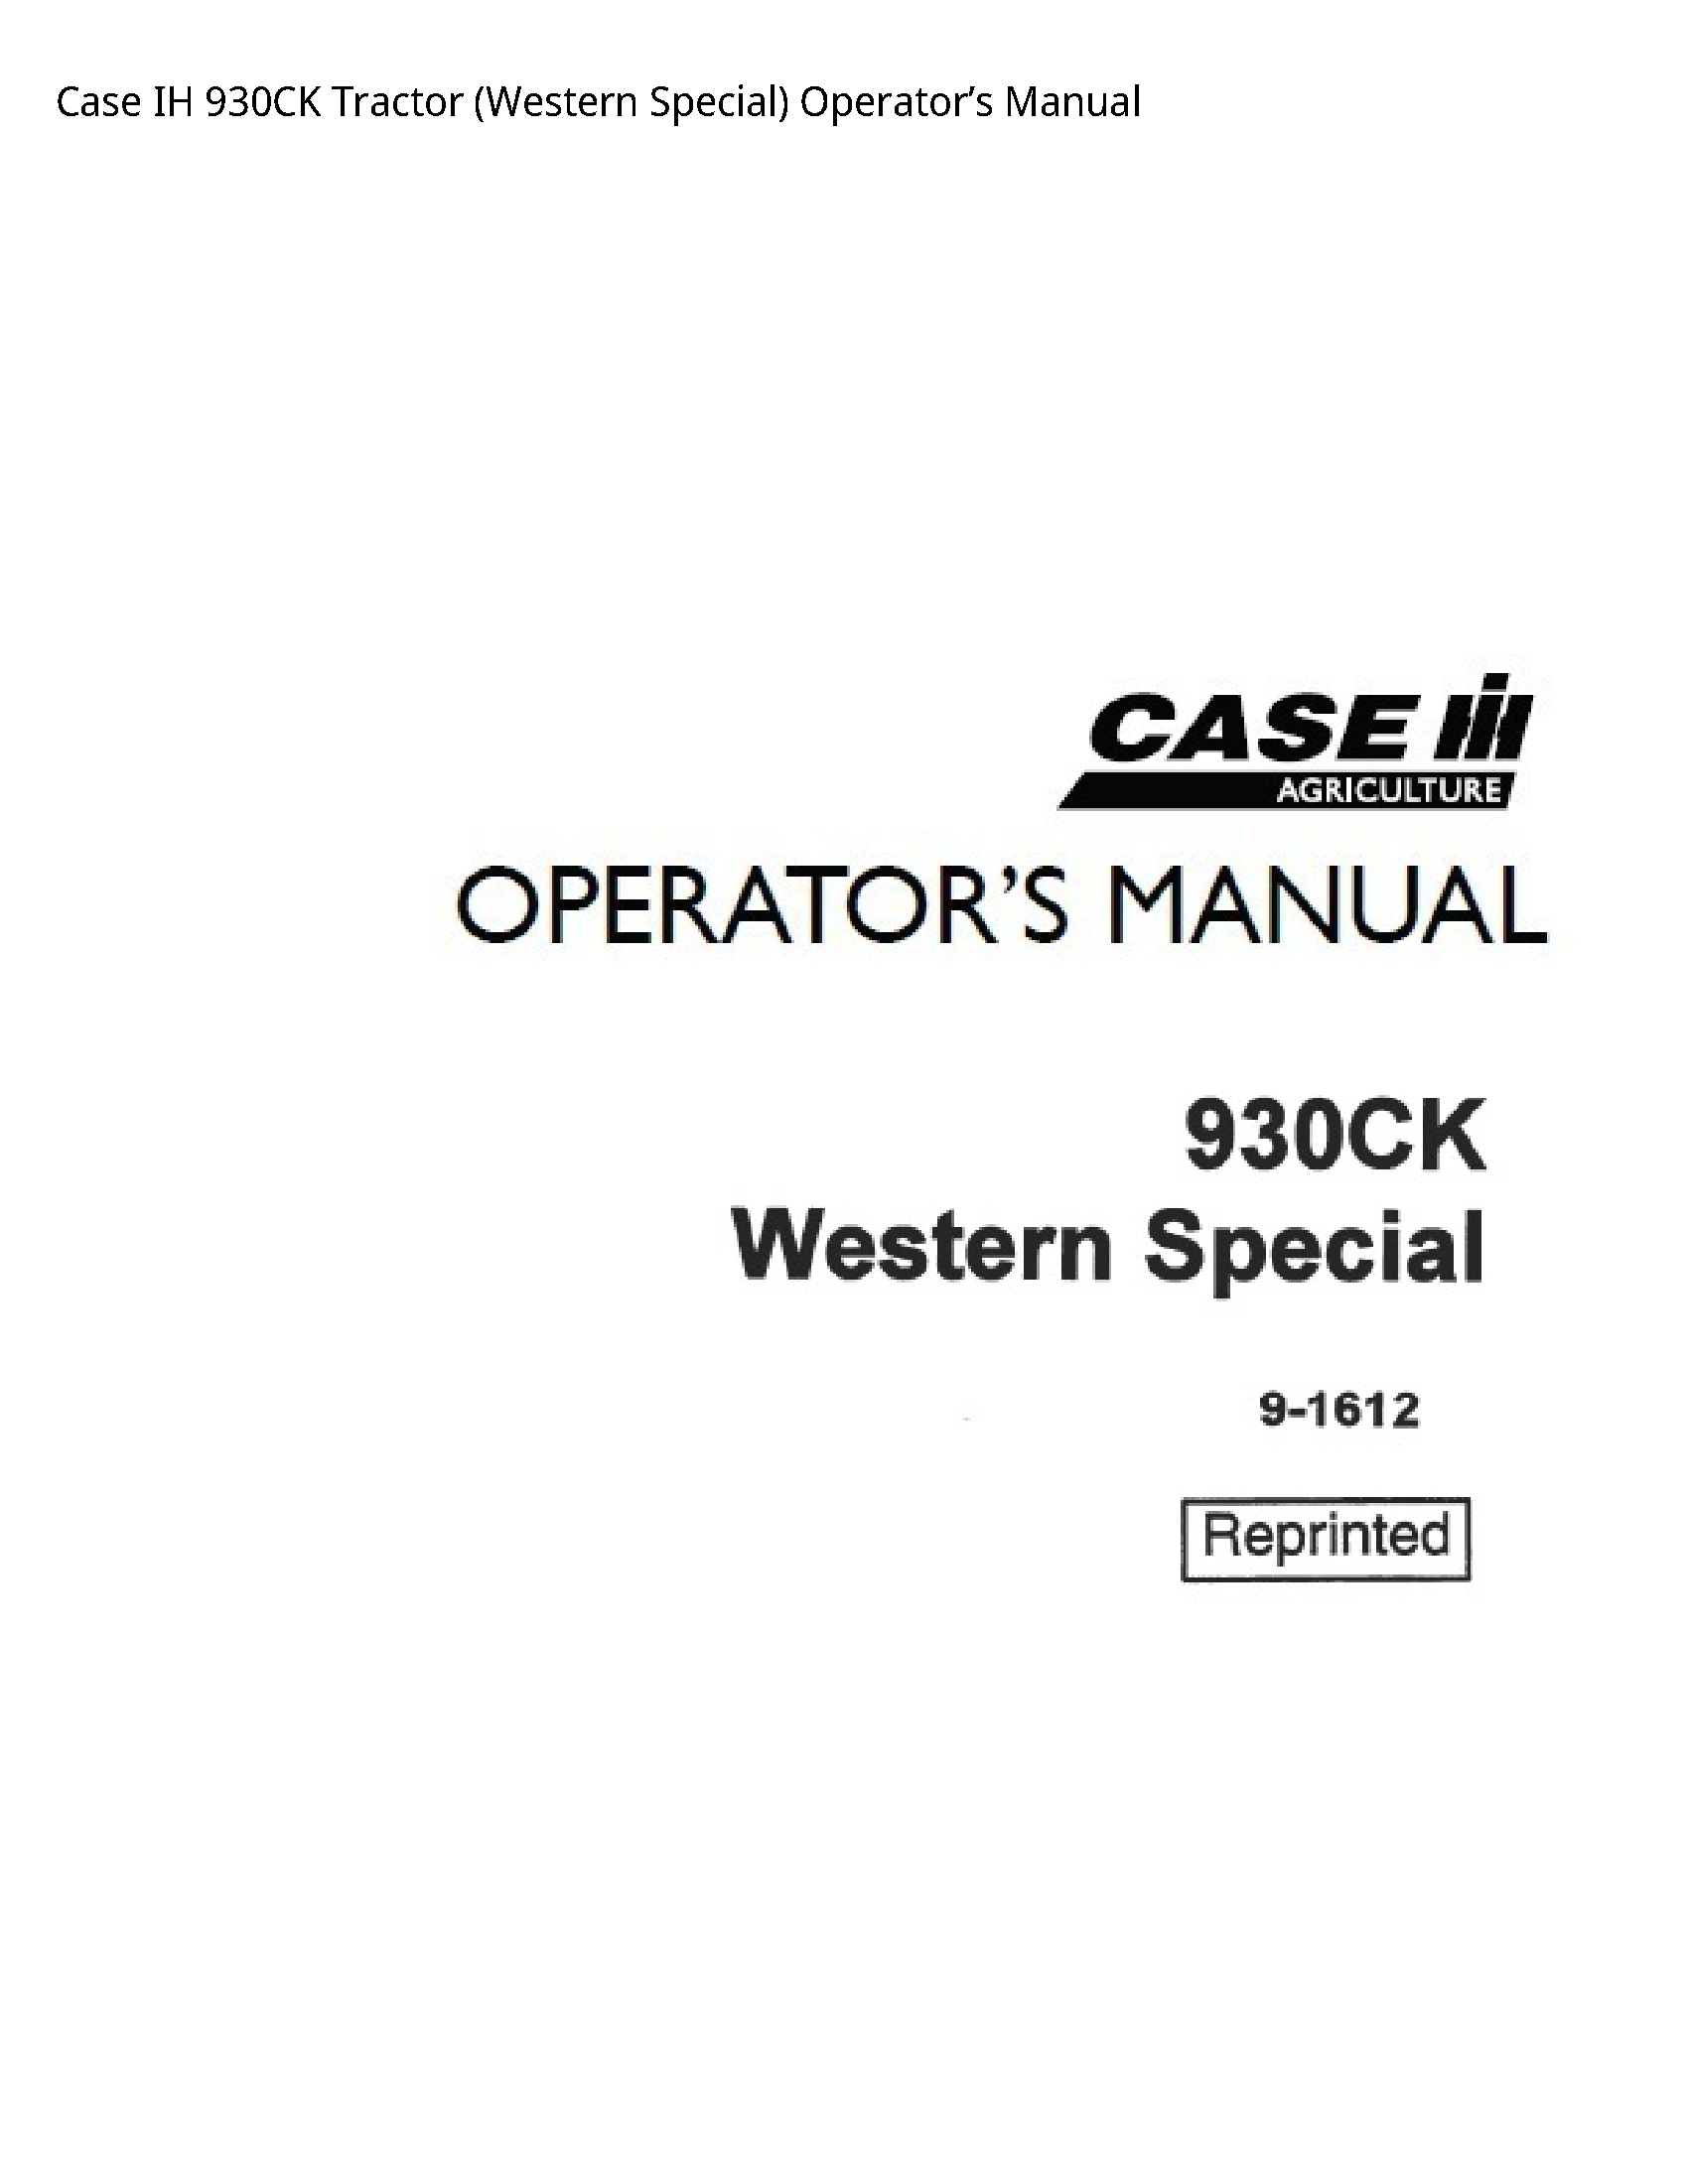 Case/Case IH 930CK IH Tractor (Western Special) Operator’s manual